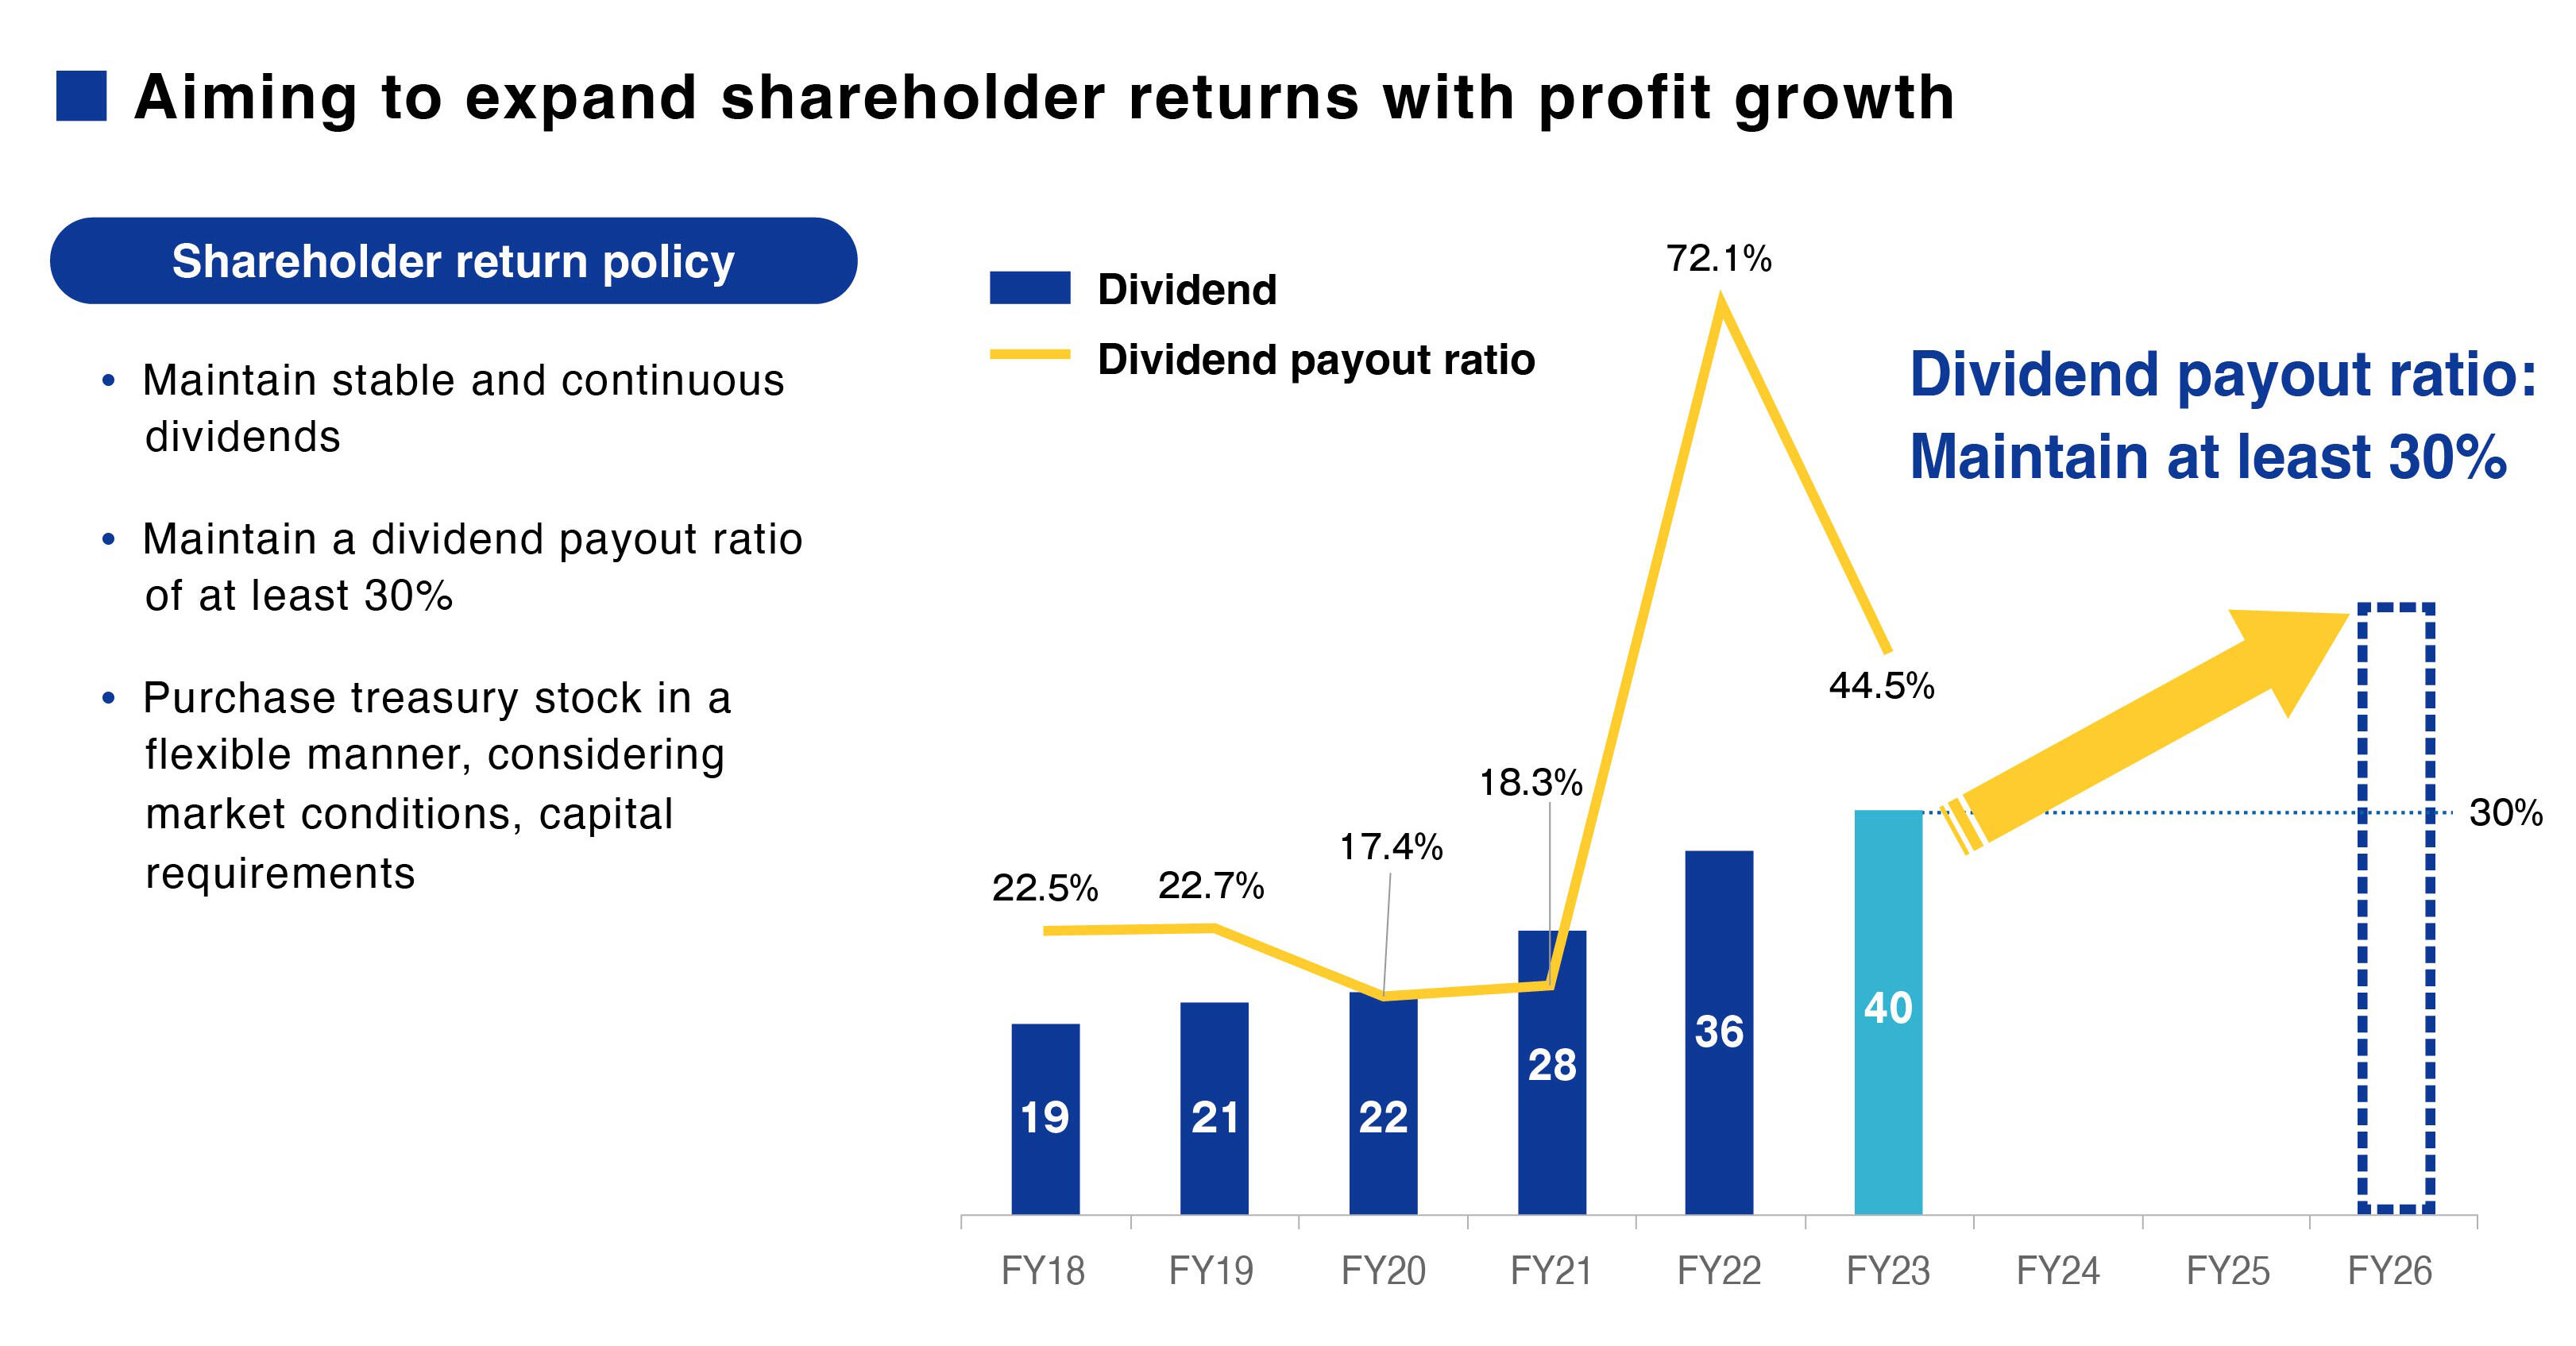 Financial Targets for 2030 and Shareholder Returns